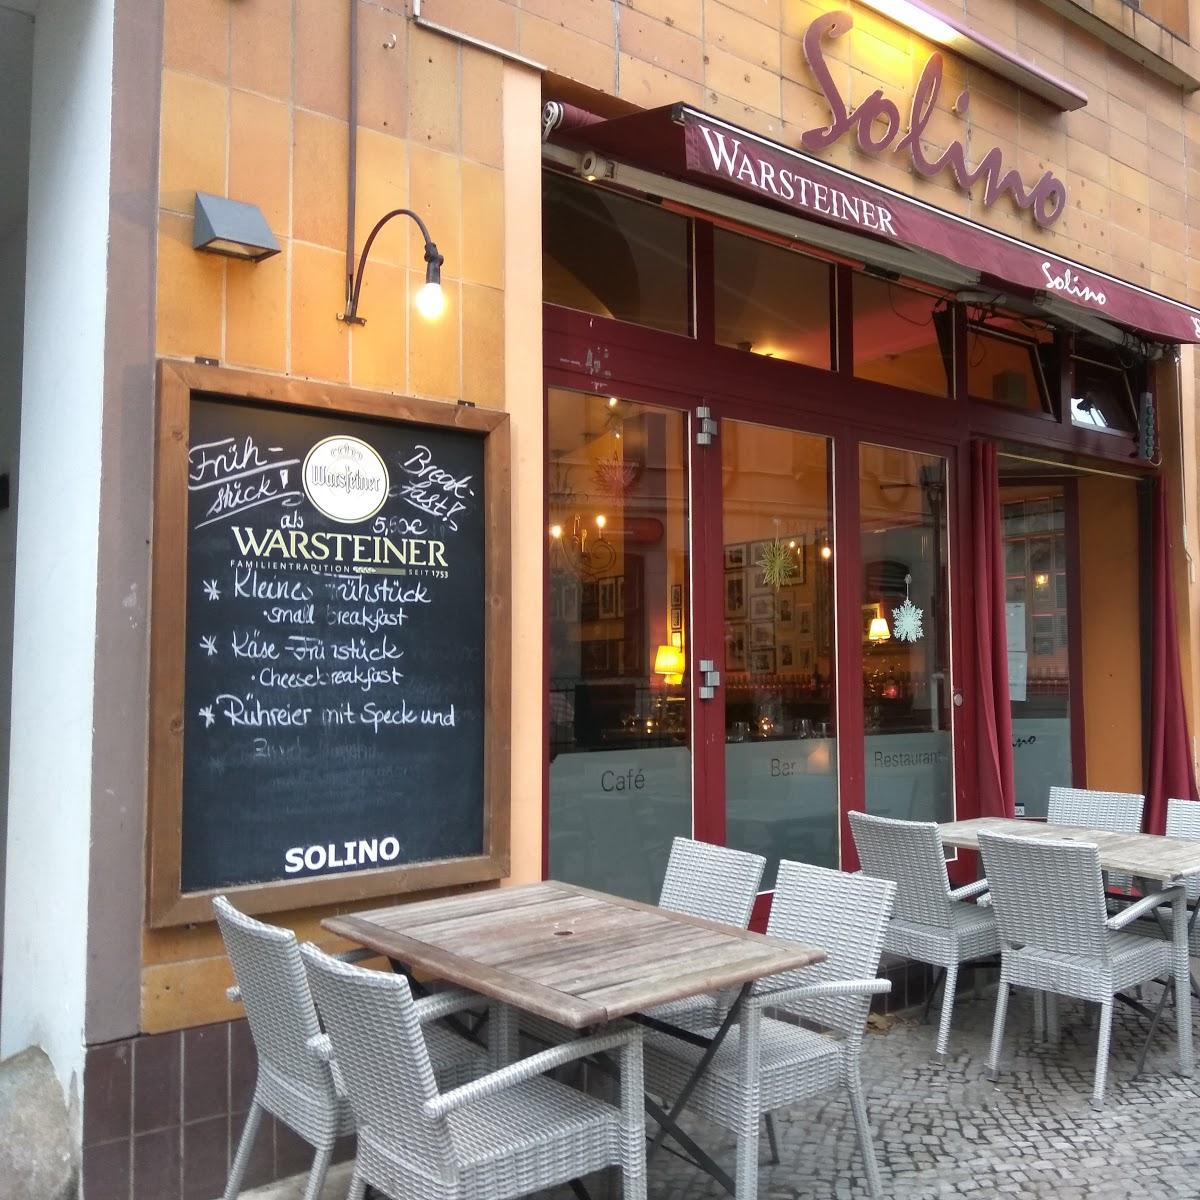 Restaurant "Solino" in Berlin